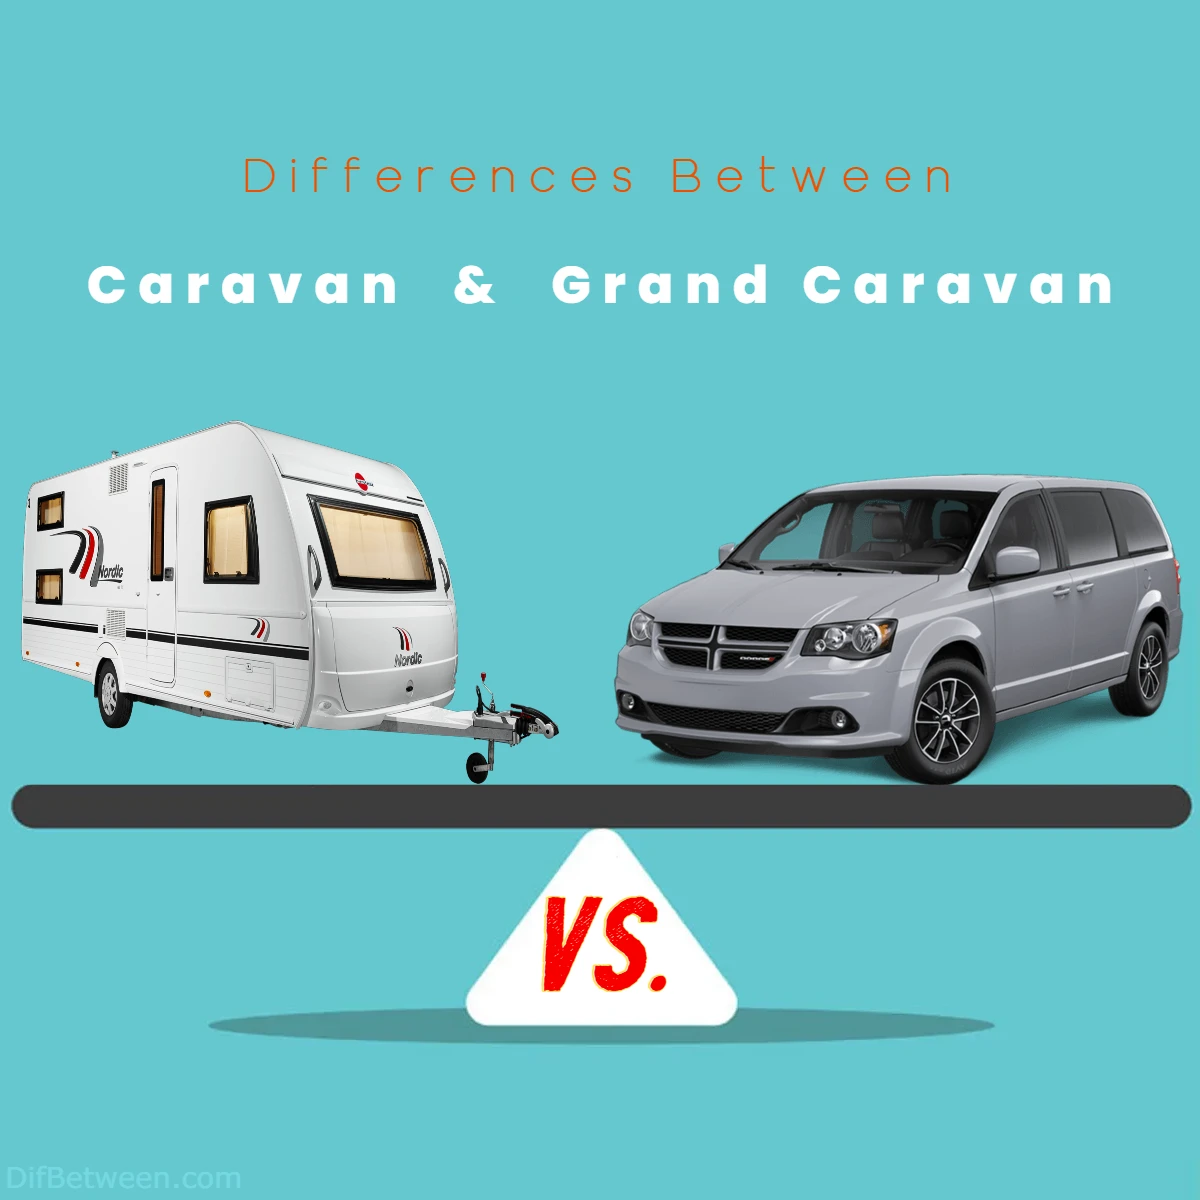 Differences Between Caravan vs Grand Caravan